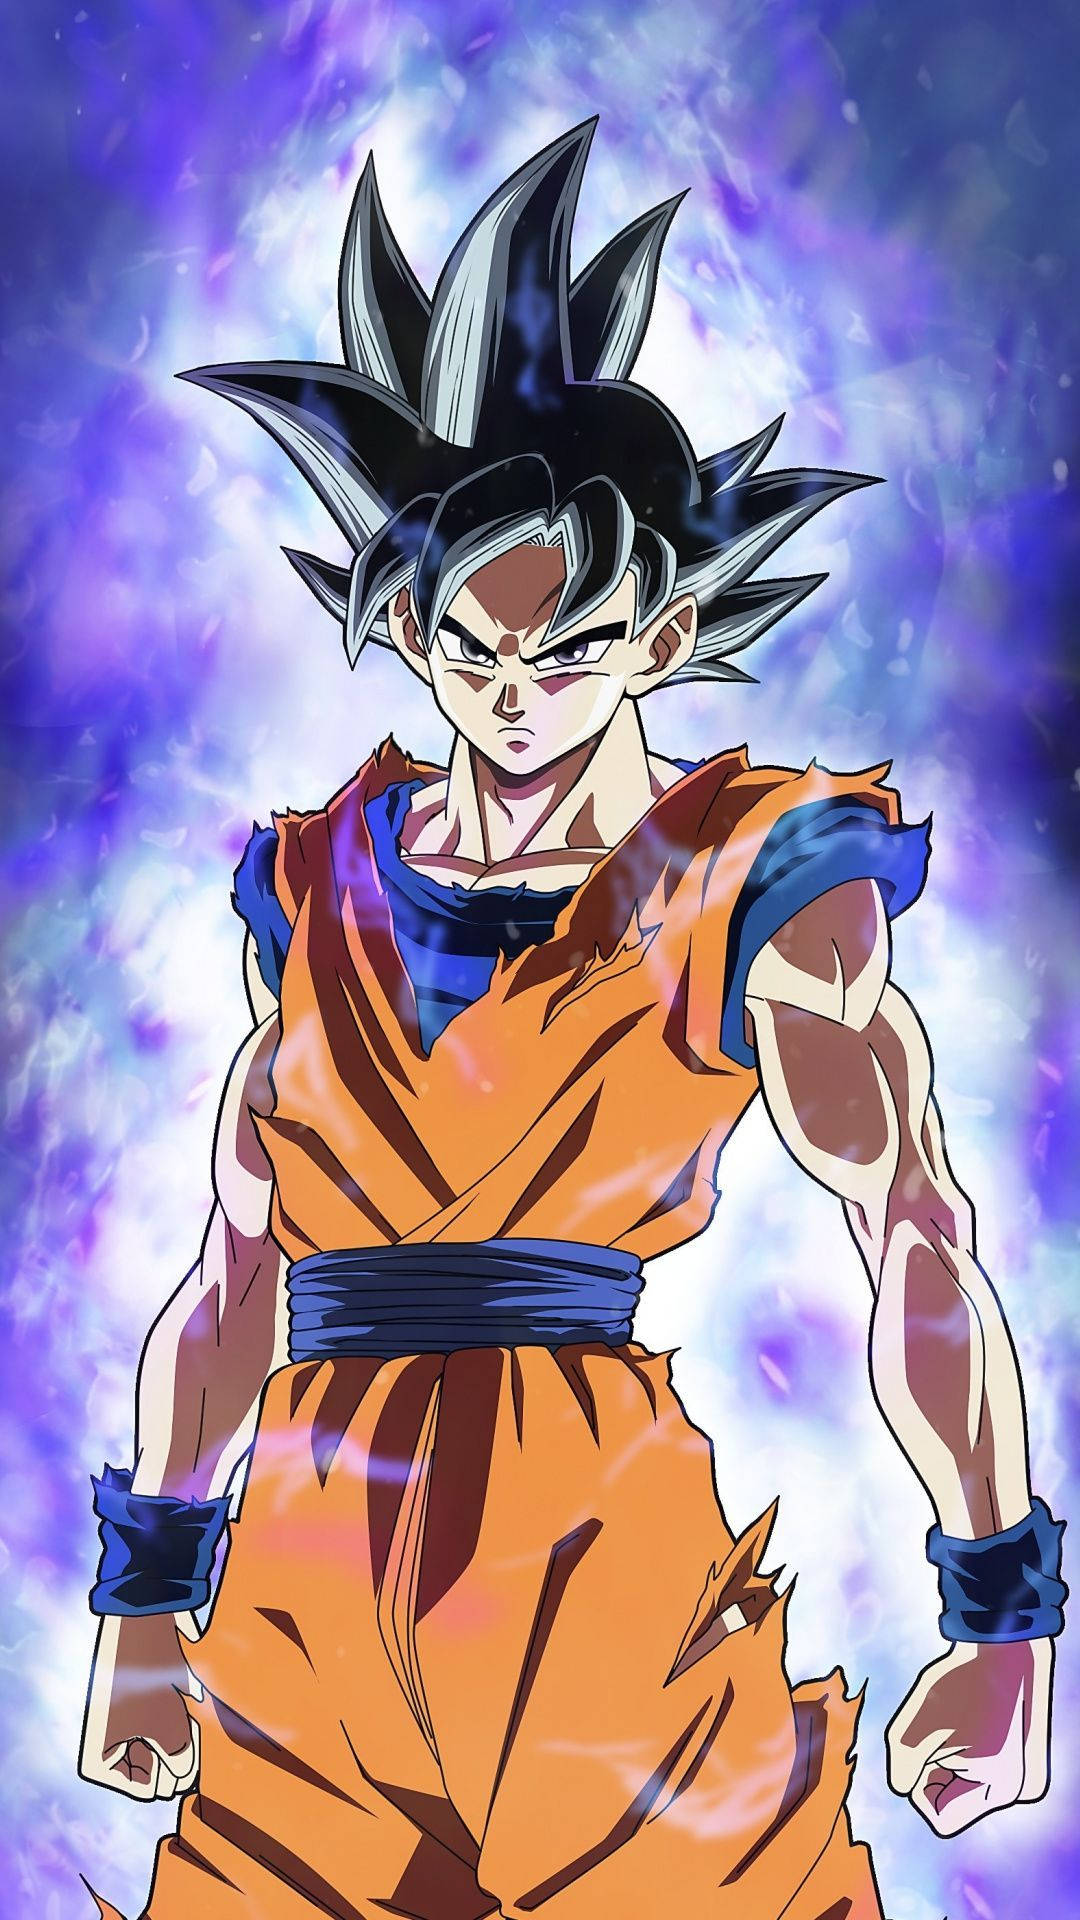 AI Art: Goku by @Richard Michaels | PixAI